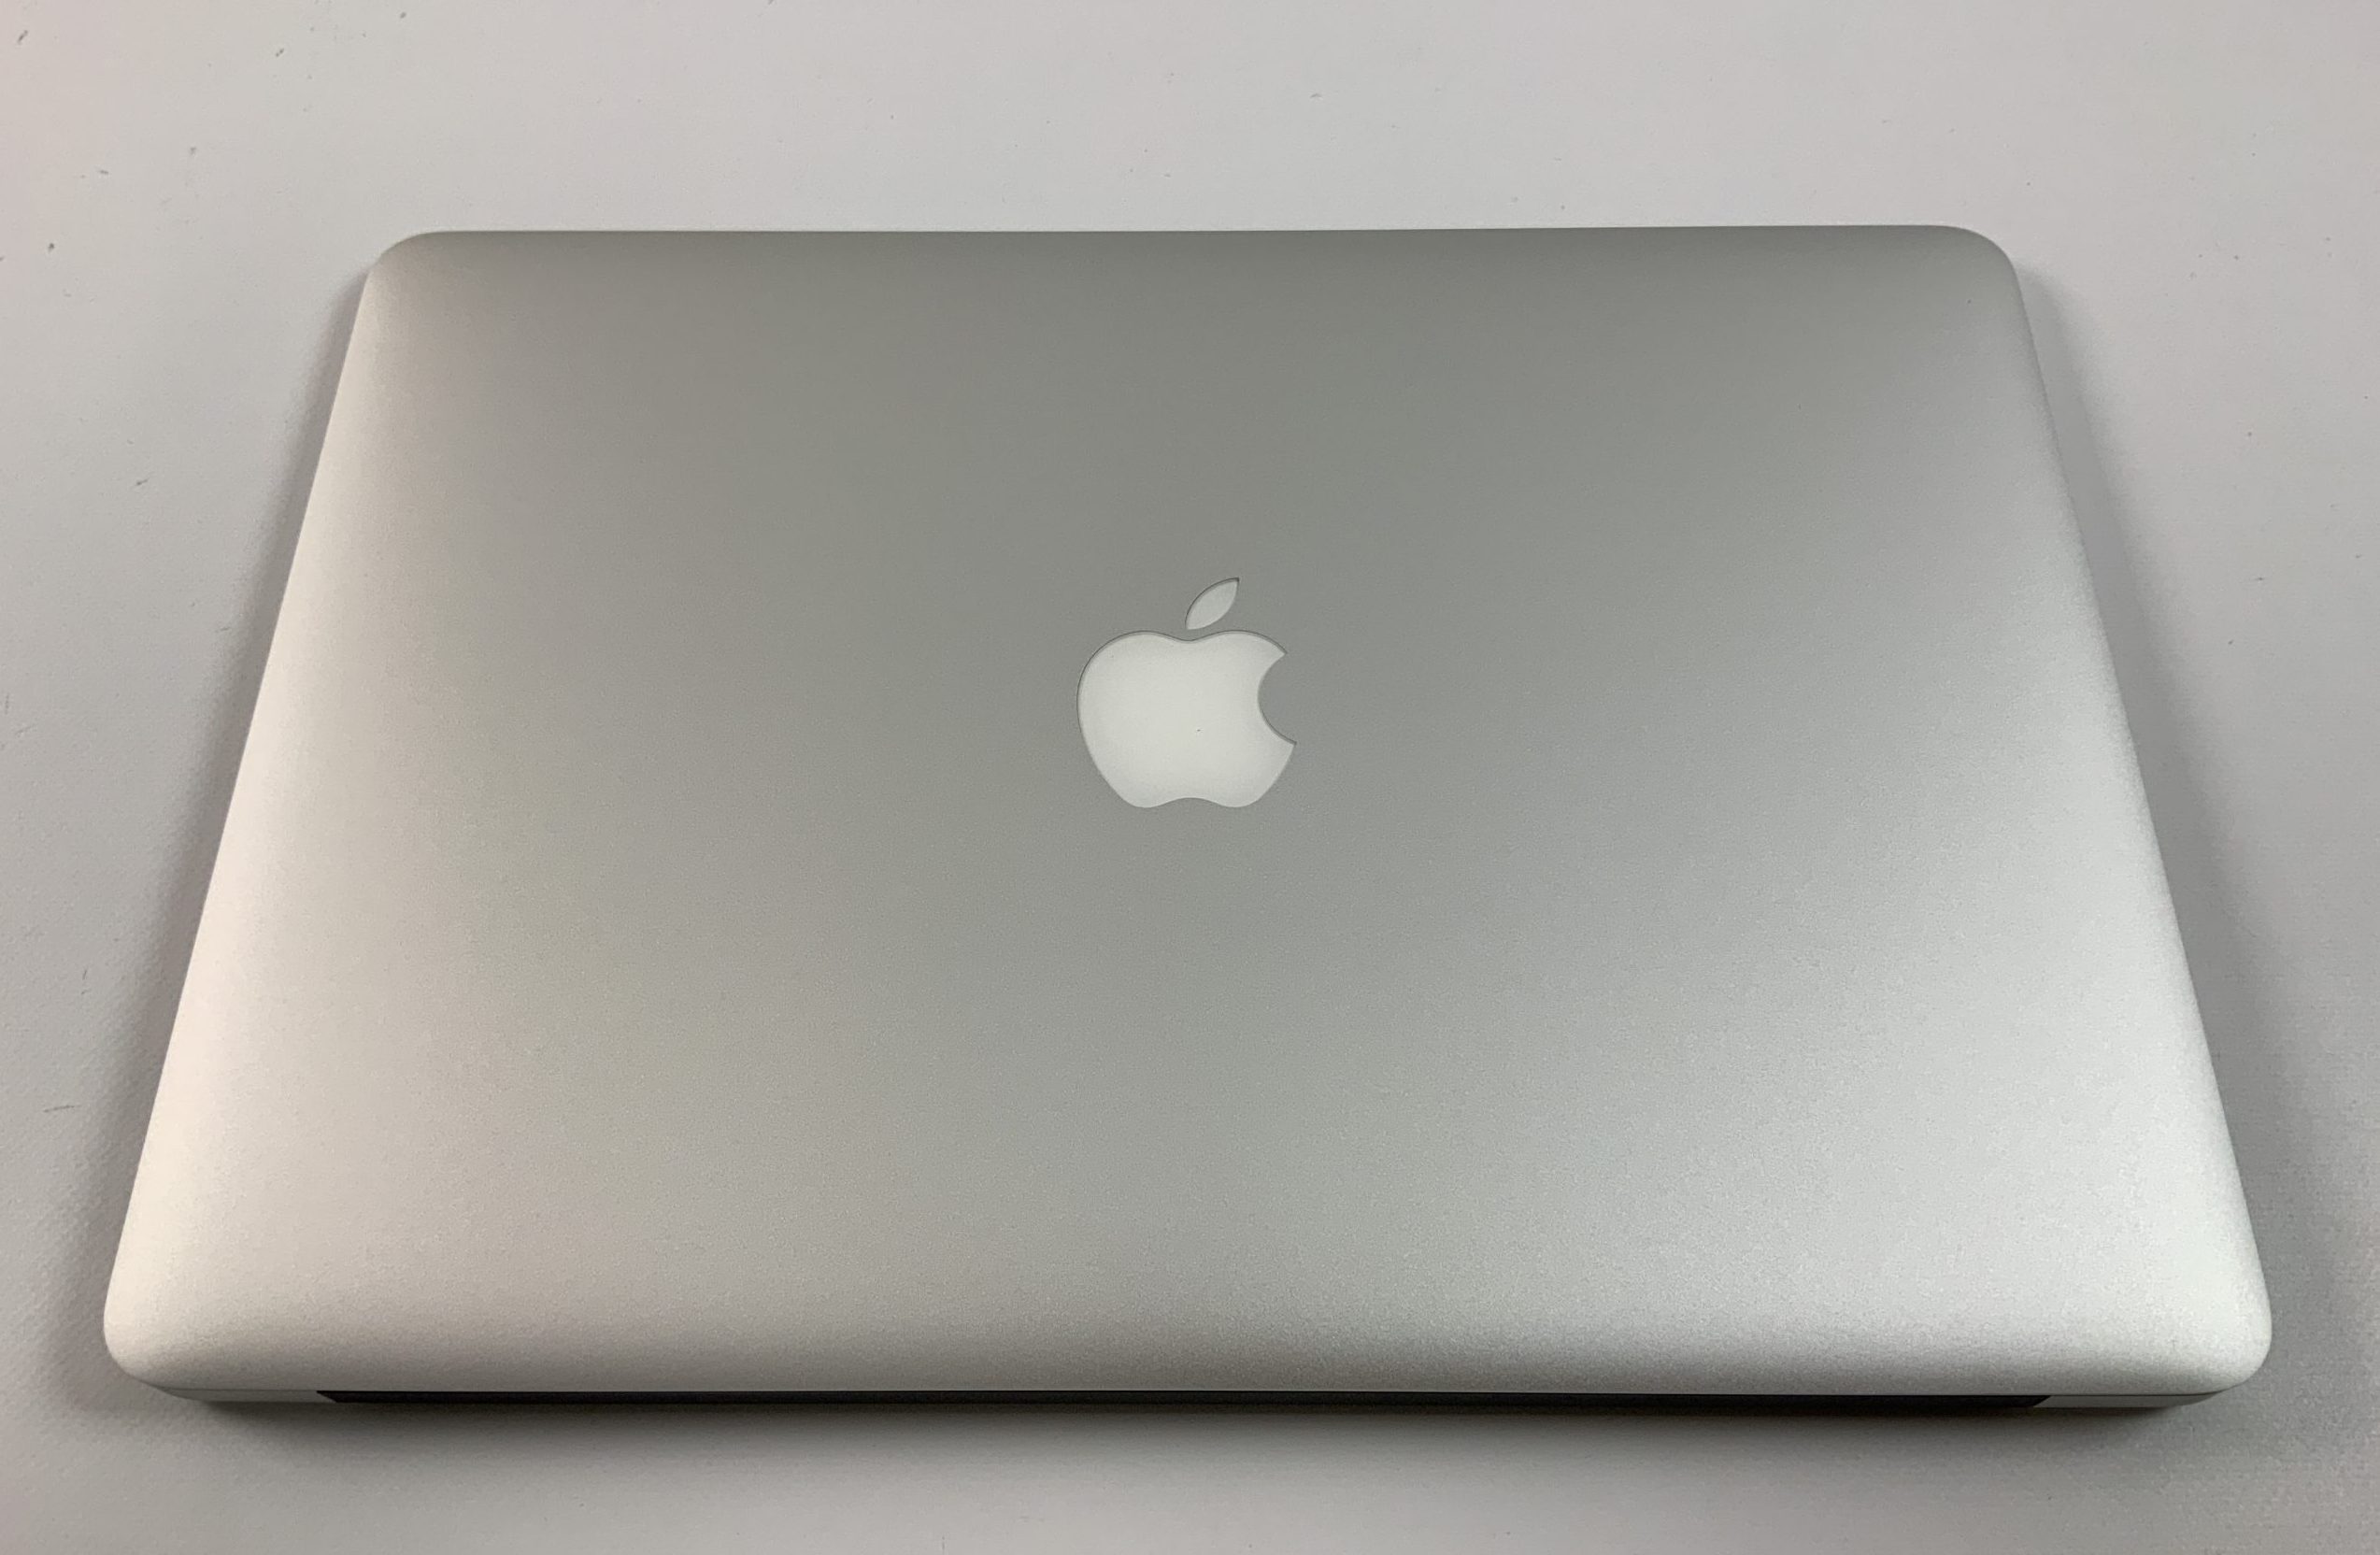 MacBook Air 13" Early 2015 (Intel Core i5 1.6 GHz 8 GB RAM 128 GB SSD), Intel Core i5 1.6 GHz, 8 GB RAM, 128 GB SSD, image 2